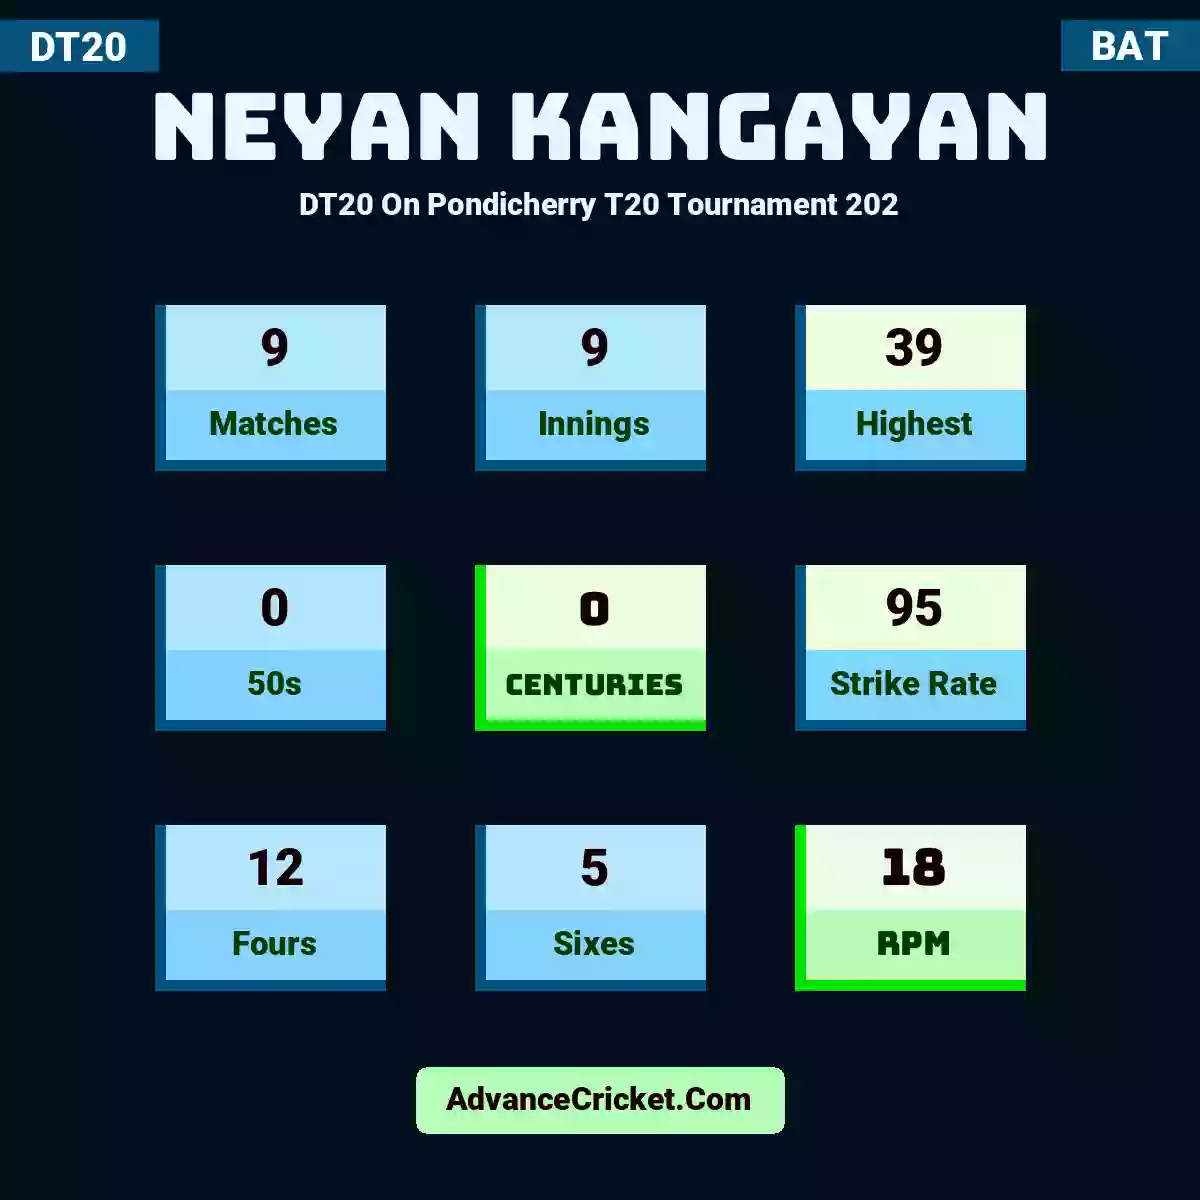 Neyan Kangayan DT20  On Pondicherry T20 Tournament 202, Neyan Kangayan played 9 matches, scored 39 runs as highest, 0 half-centuries, and 0 centuries, with a strike rate of 95. N.Kangayan hit 12 fours and 5 sixes, with an RPM of 18.